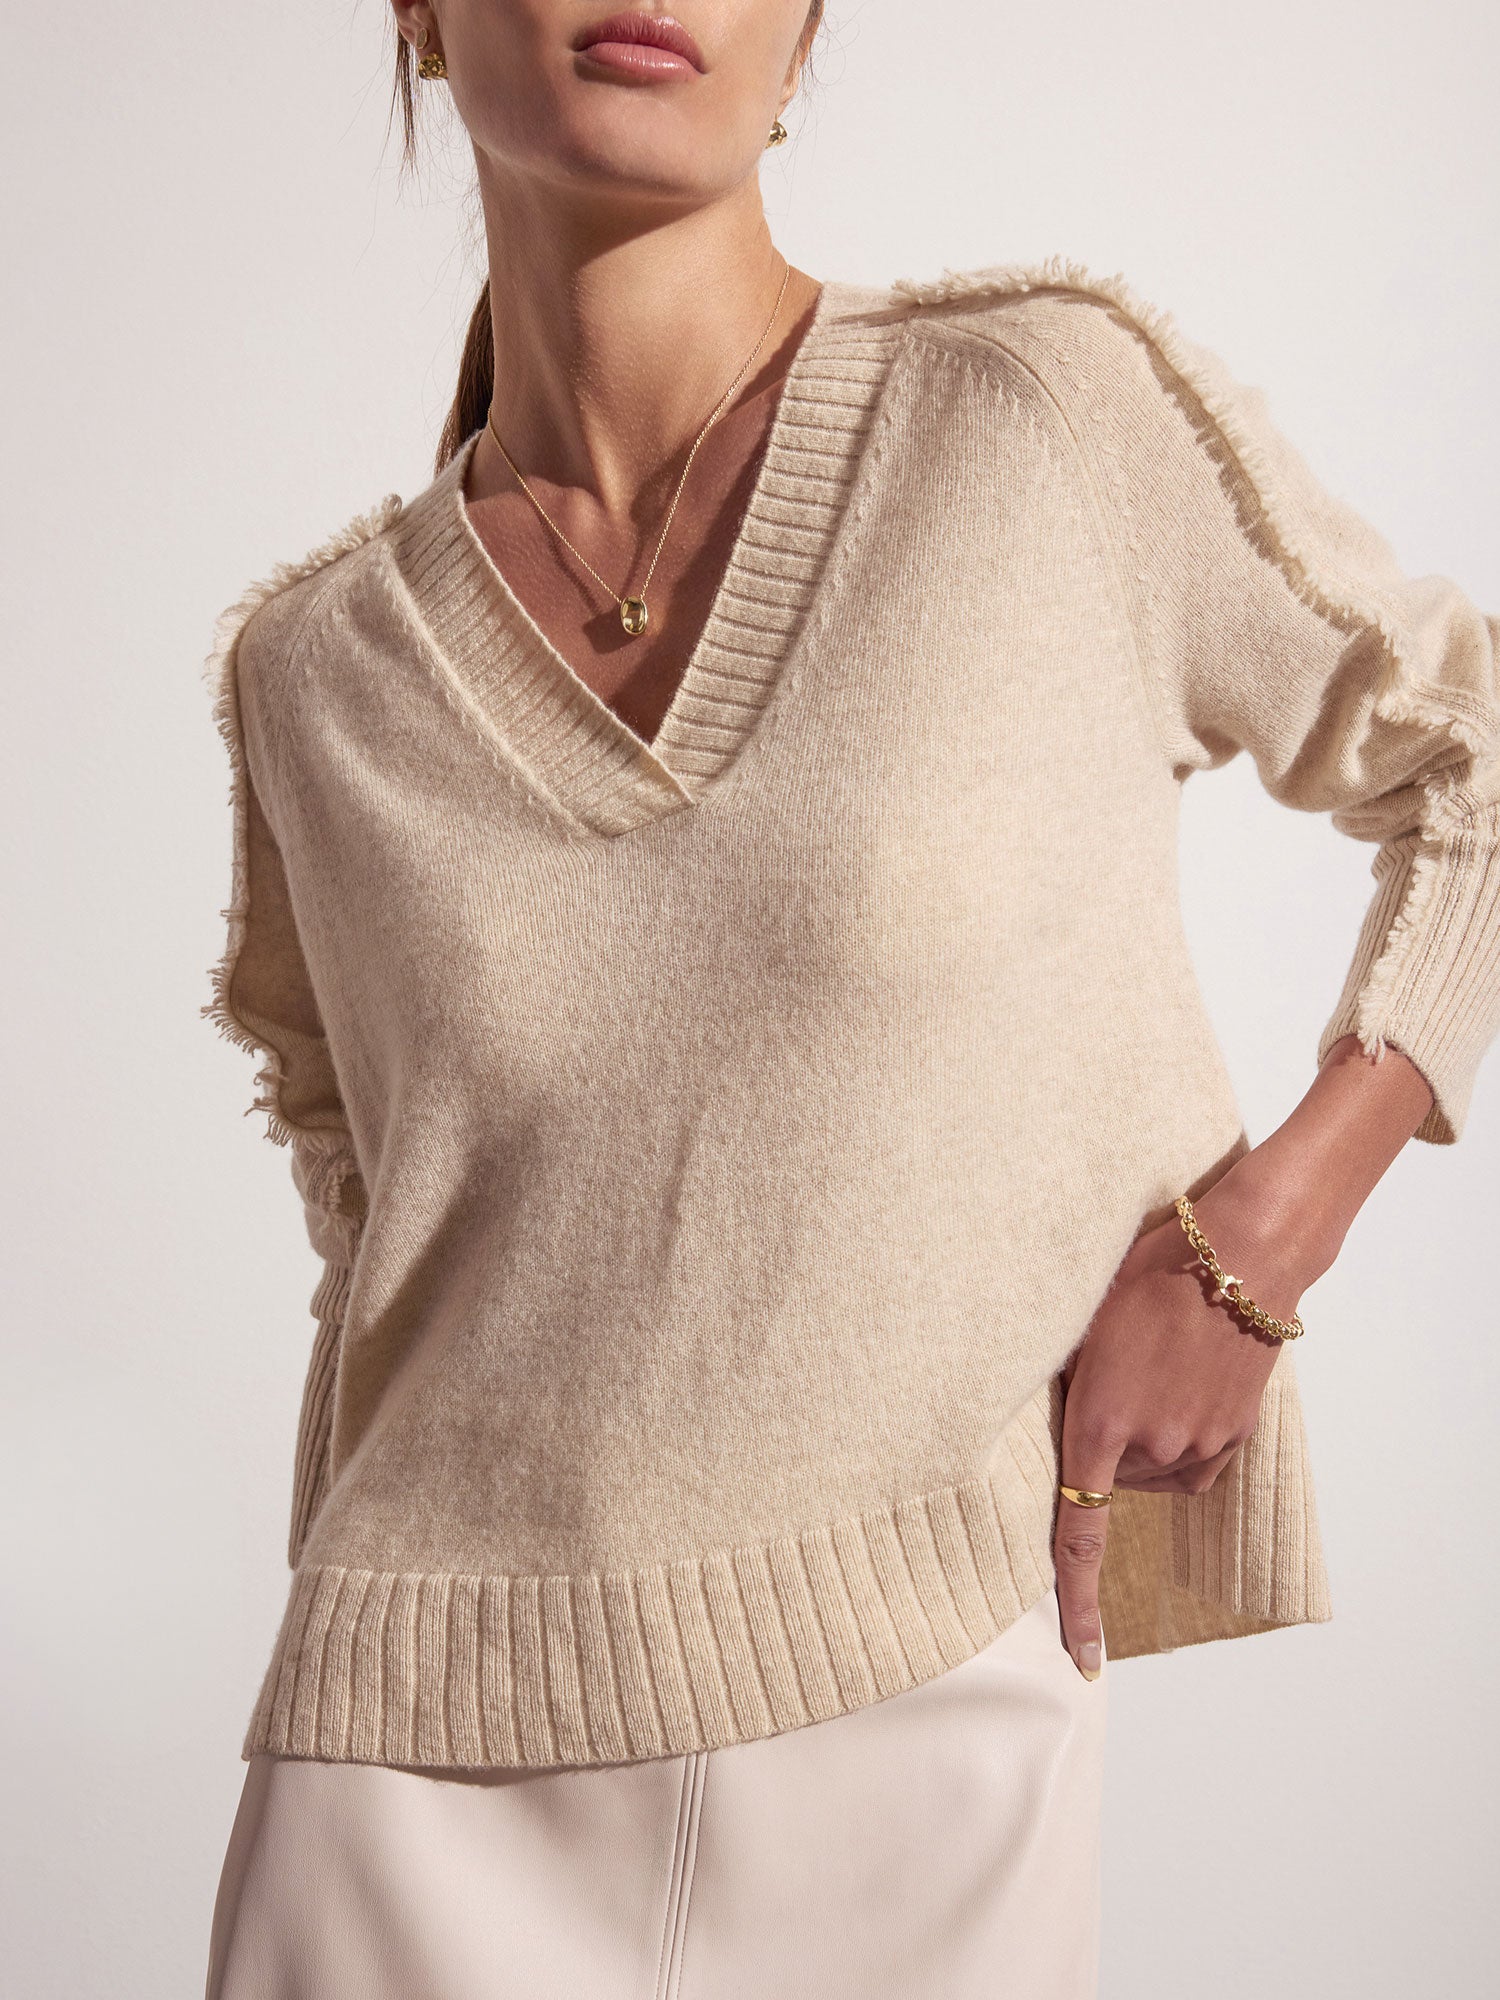 Jolie beige fringe trim v-neck sweater flat view front view